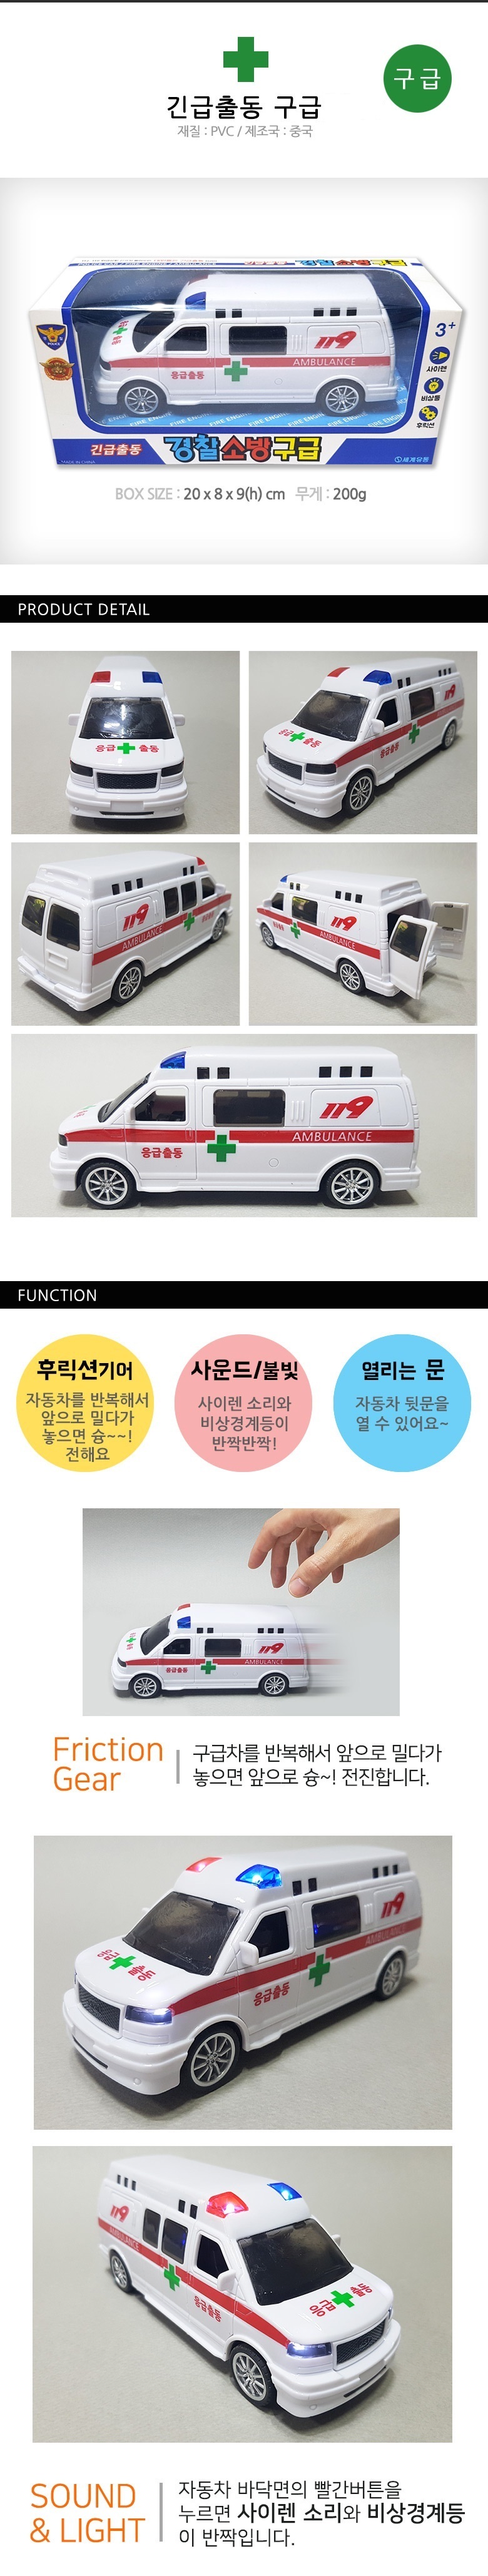 ambulance8000_1.jpg